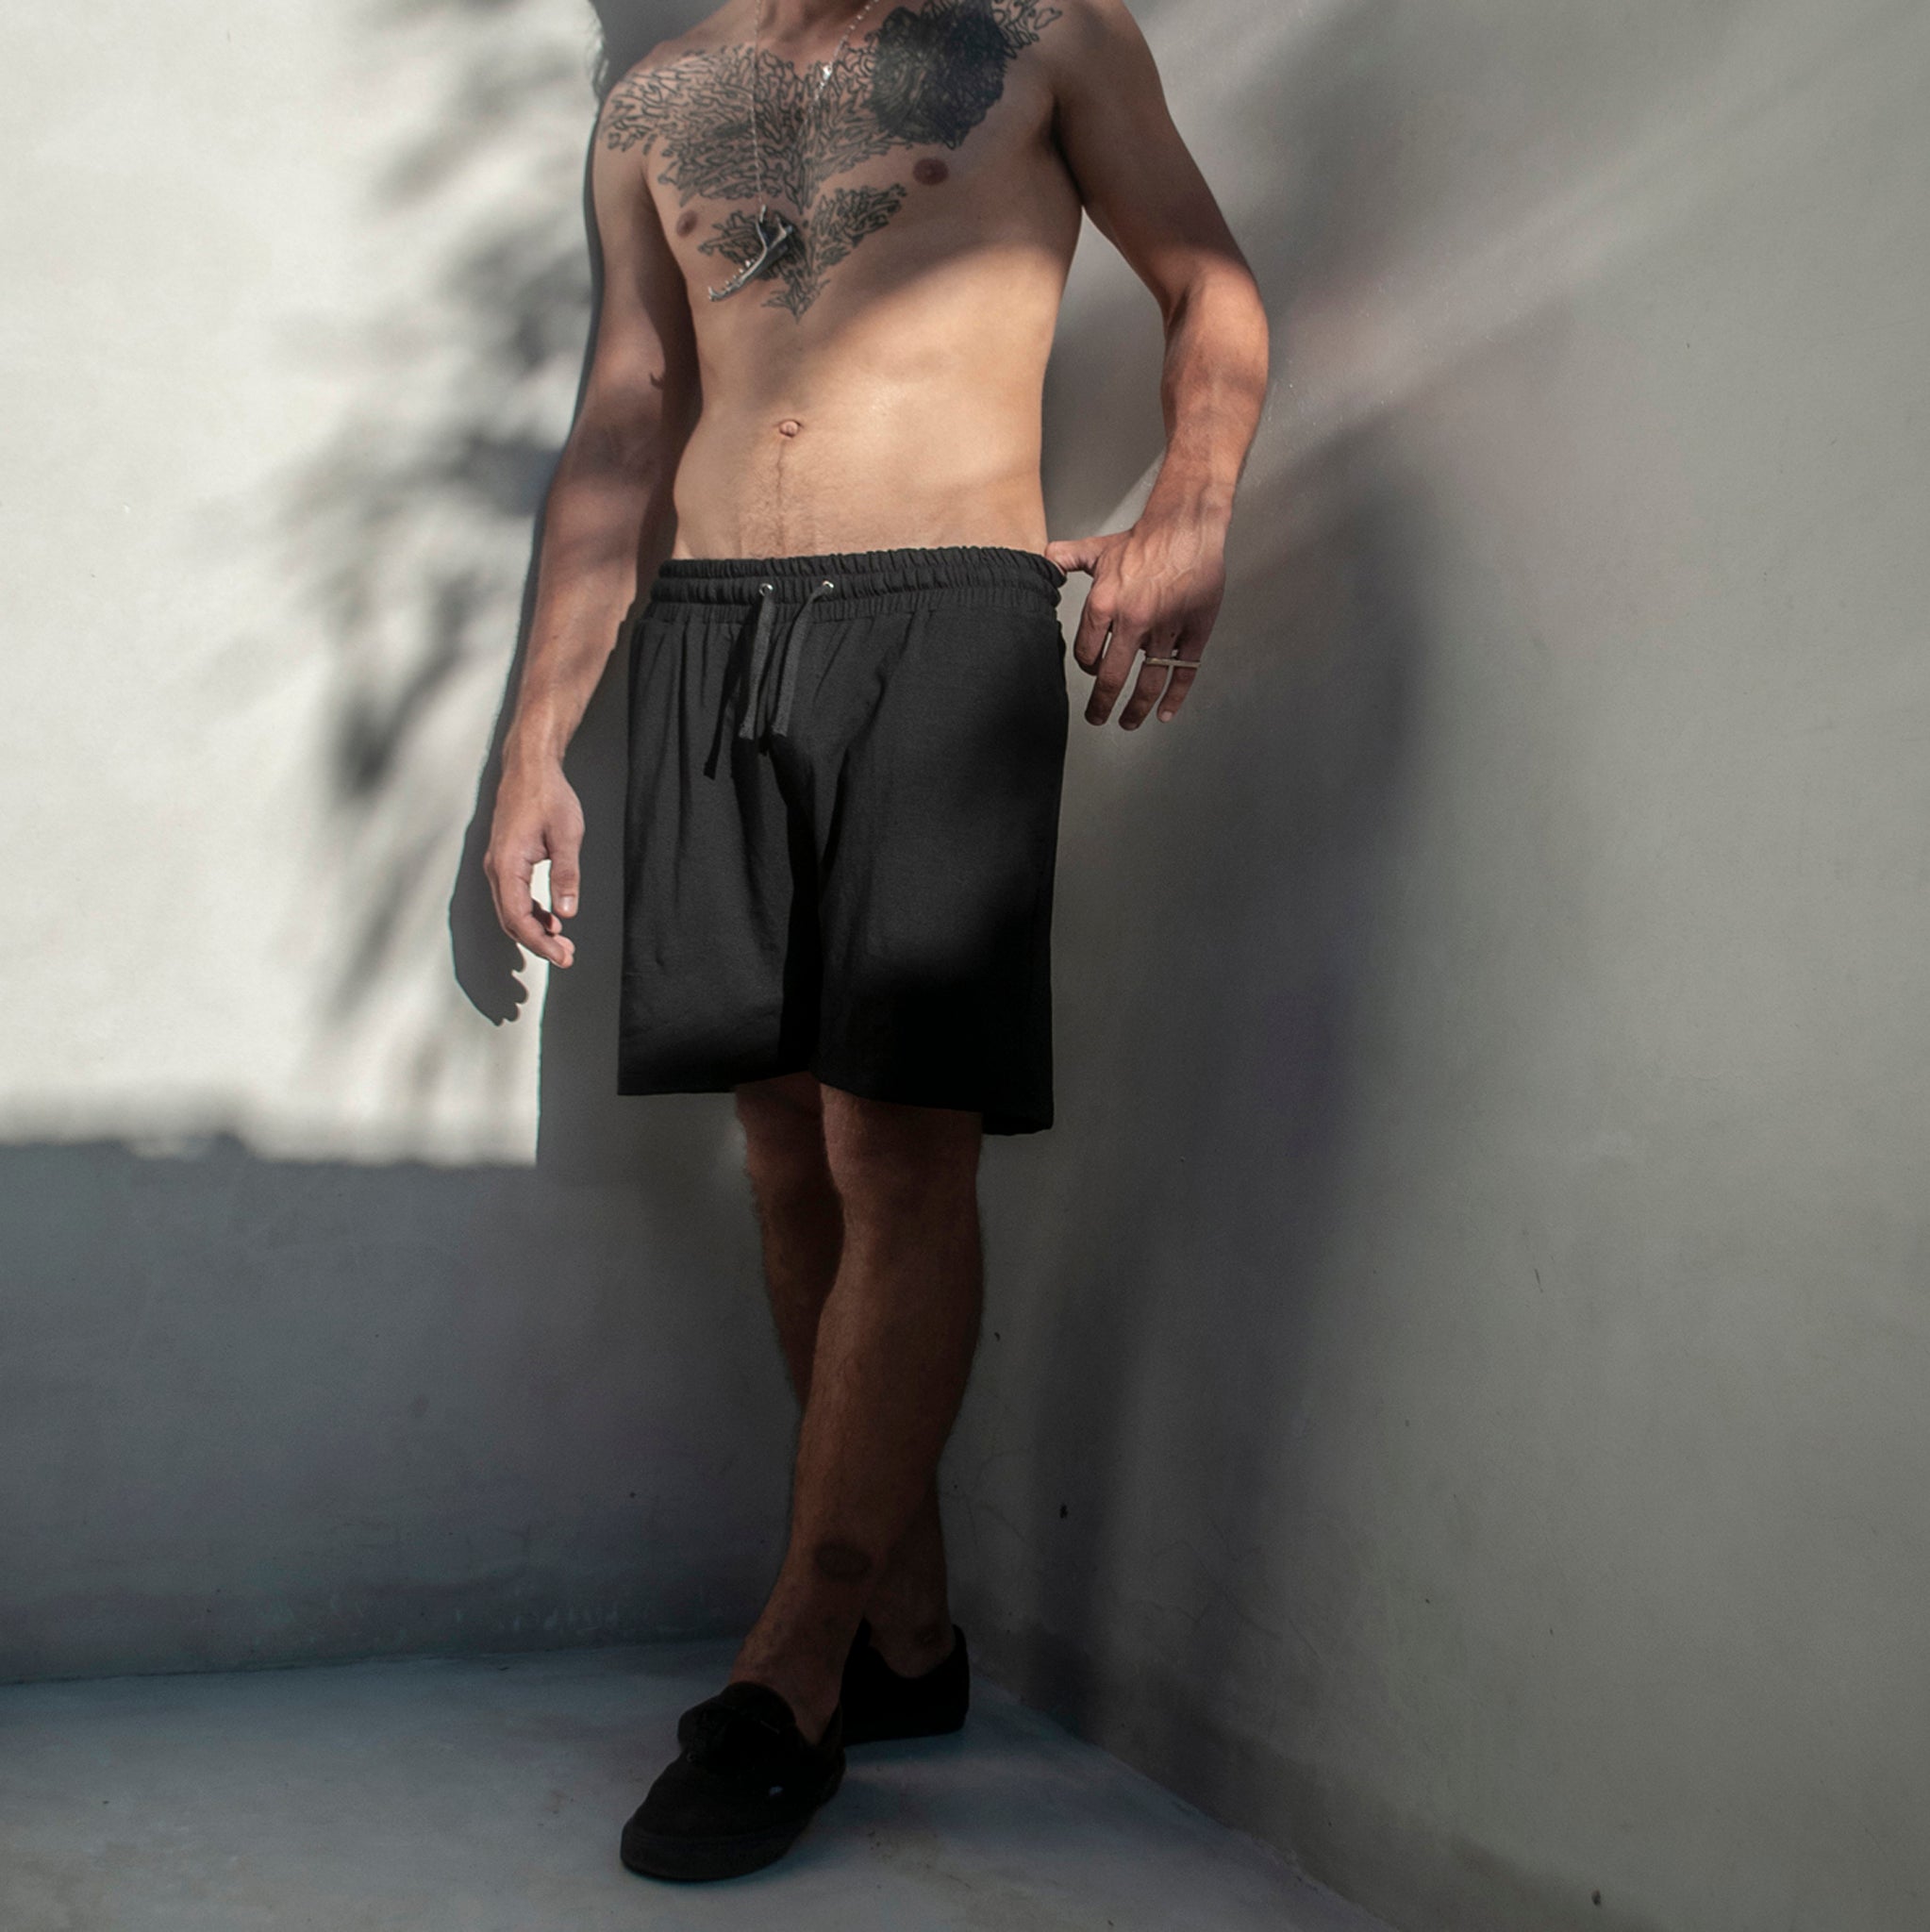 Men's Black Gym Shorts Modal Lycra